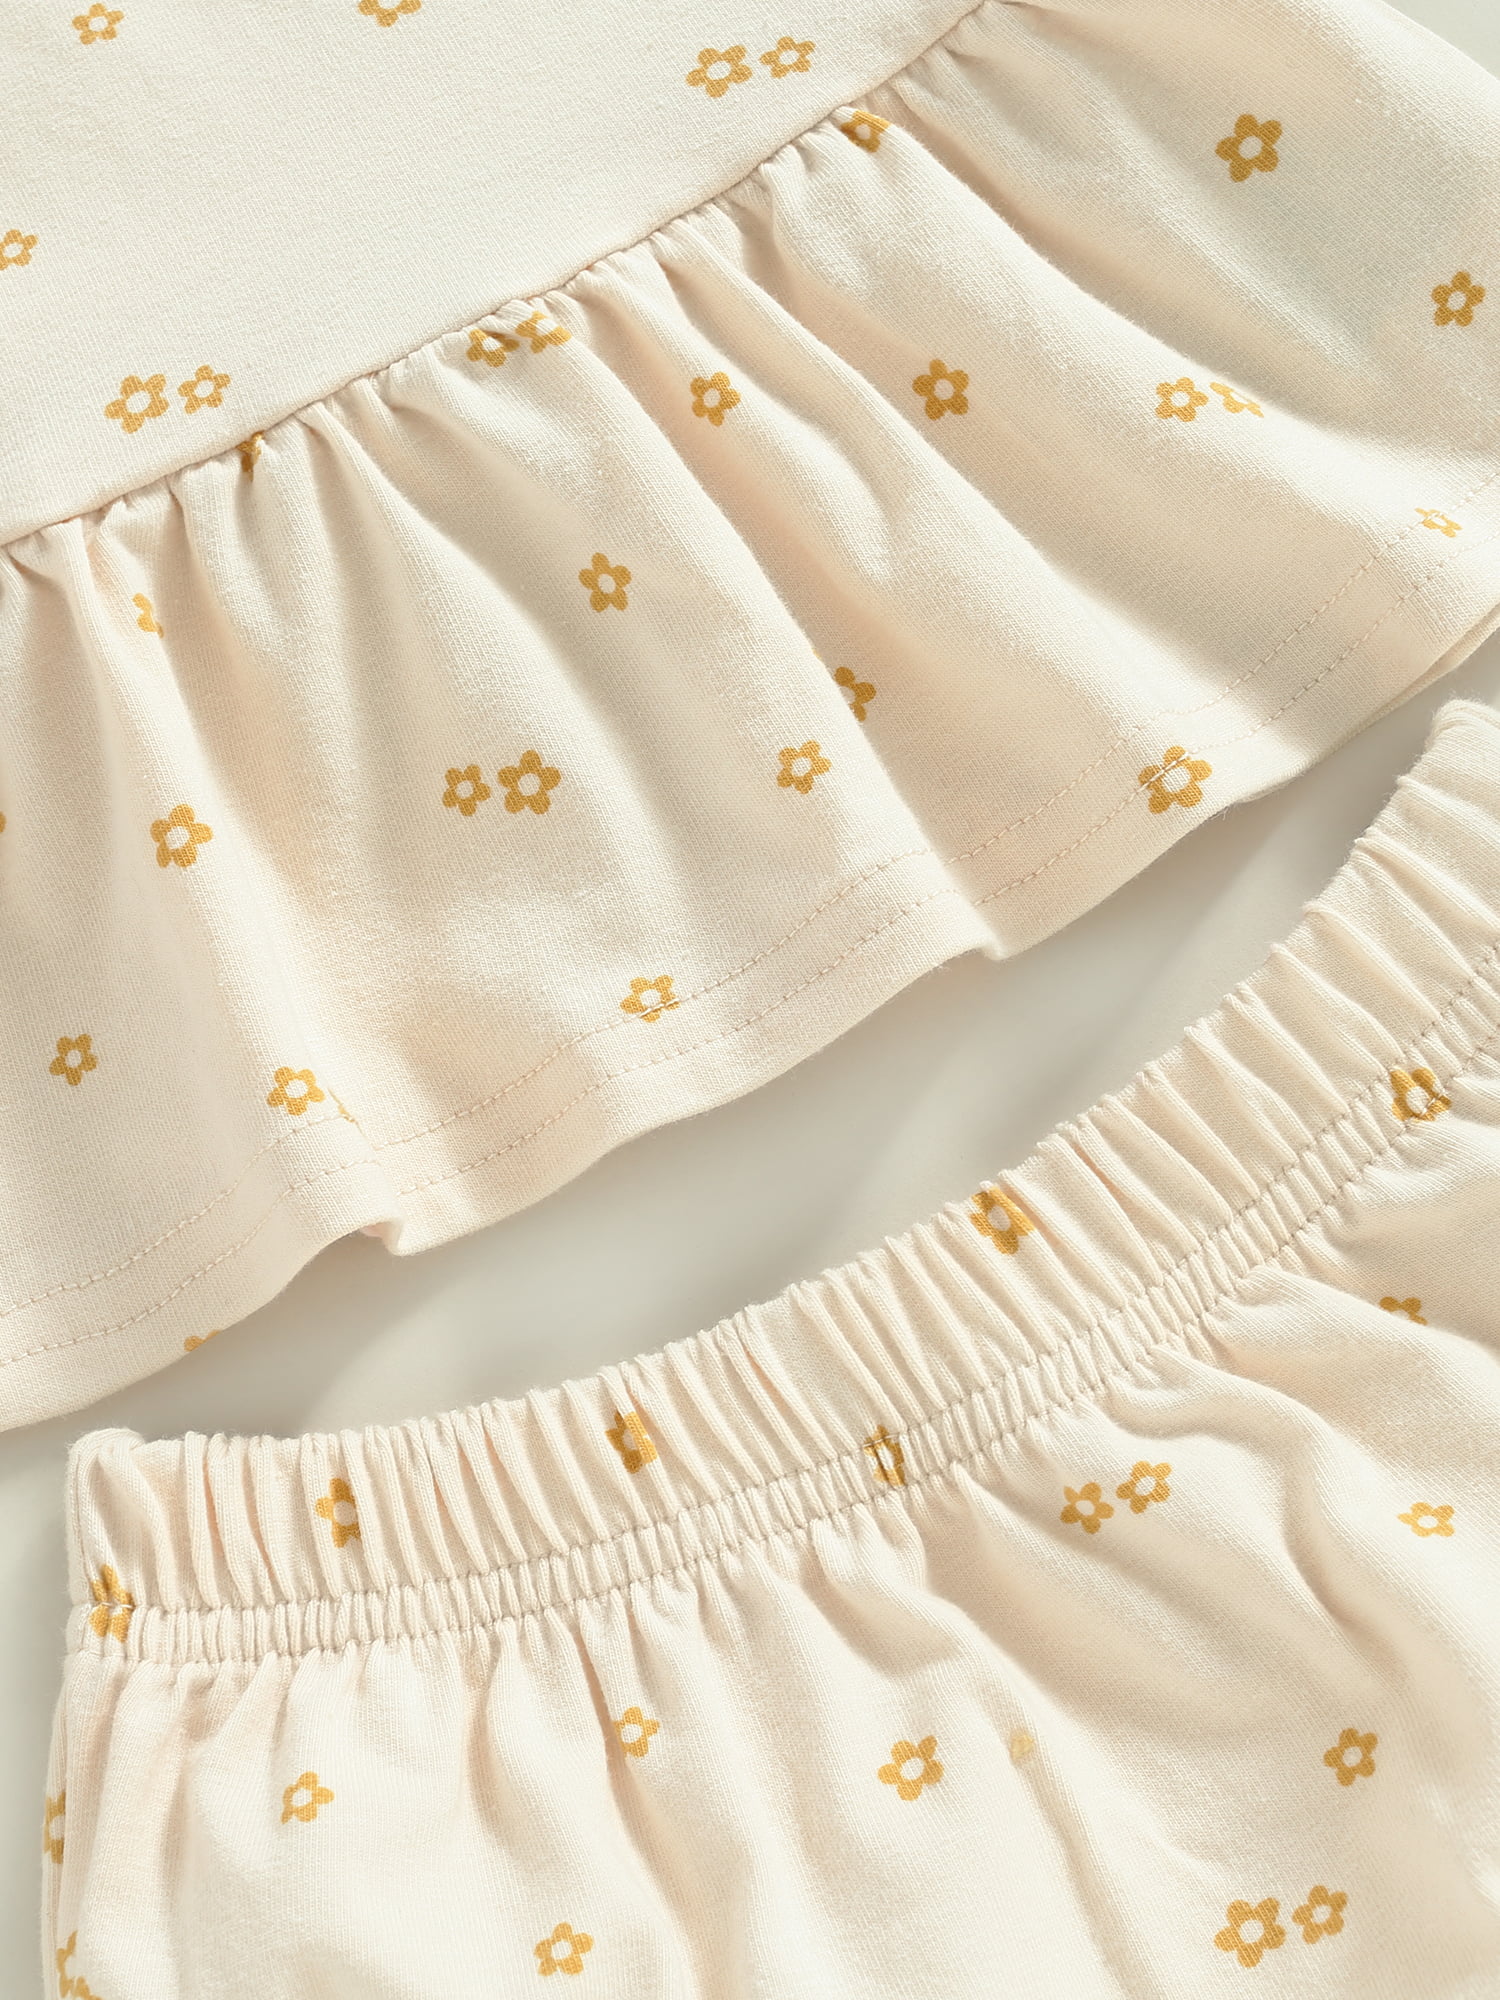 Bagilaanoe 2pcs Newborn Baby Girl Short Pants Set Checkerboard Print Sleeveless Romper Tops + Ruffle Shorts 3M 6M 12M 18M Infant Casual Summer Outfits